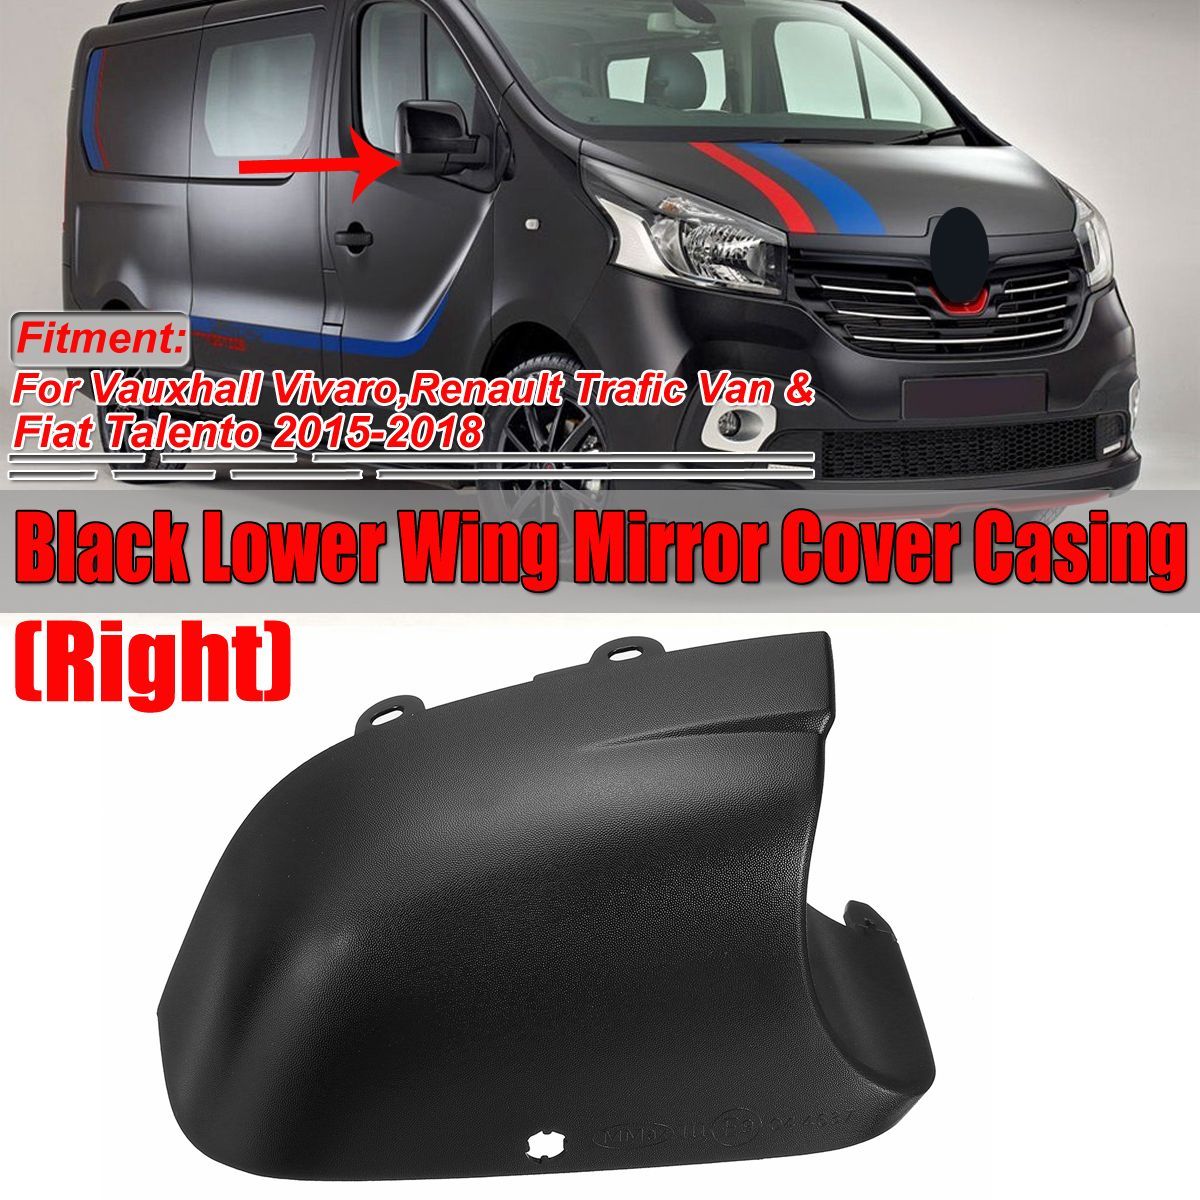 Right-Black-Car-Lower-Wing-Mirror-Cover-Casing-Bottom-For-Vauxhall-Vivaro-Renault-Trafic-Van-Fiat-Ta-1584335